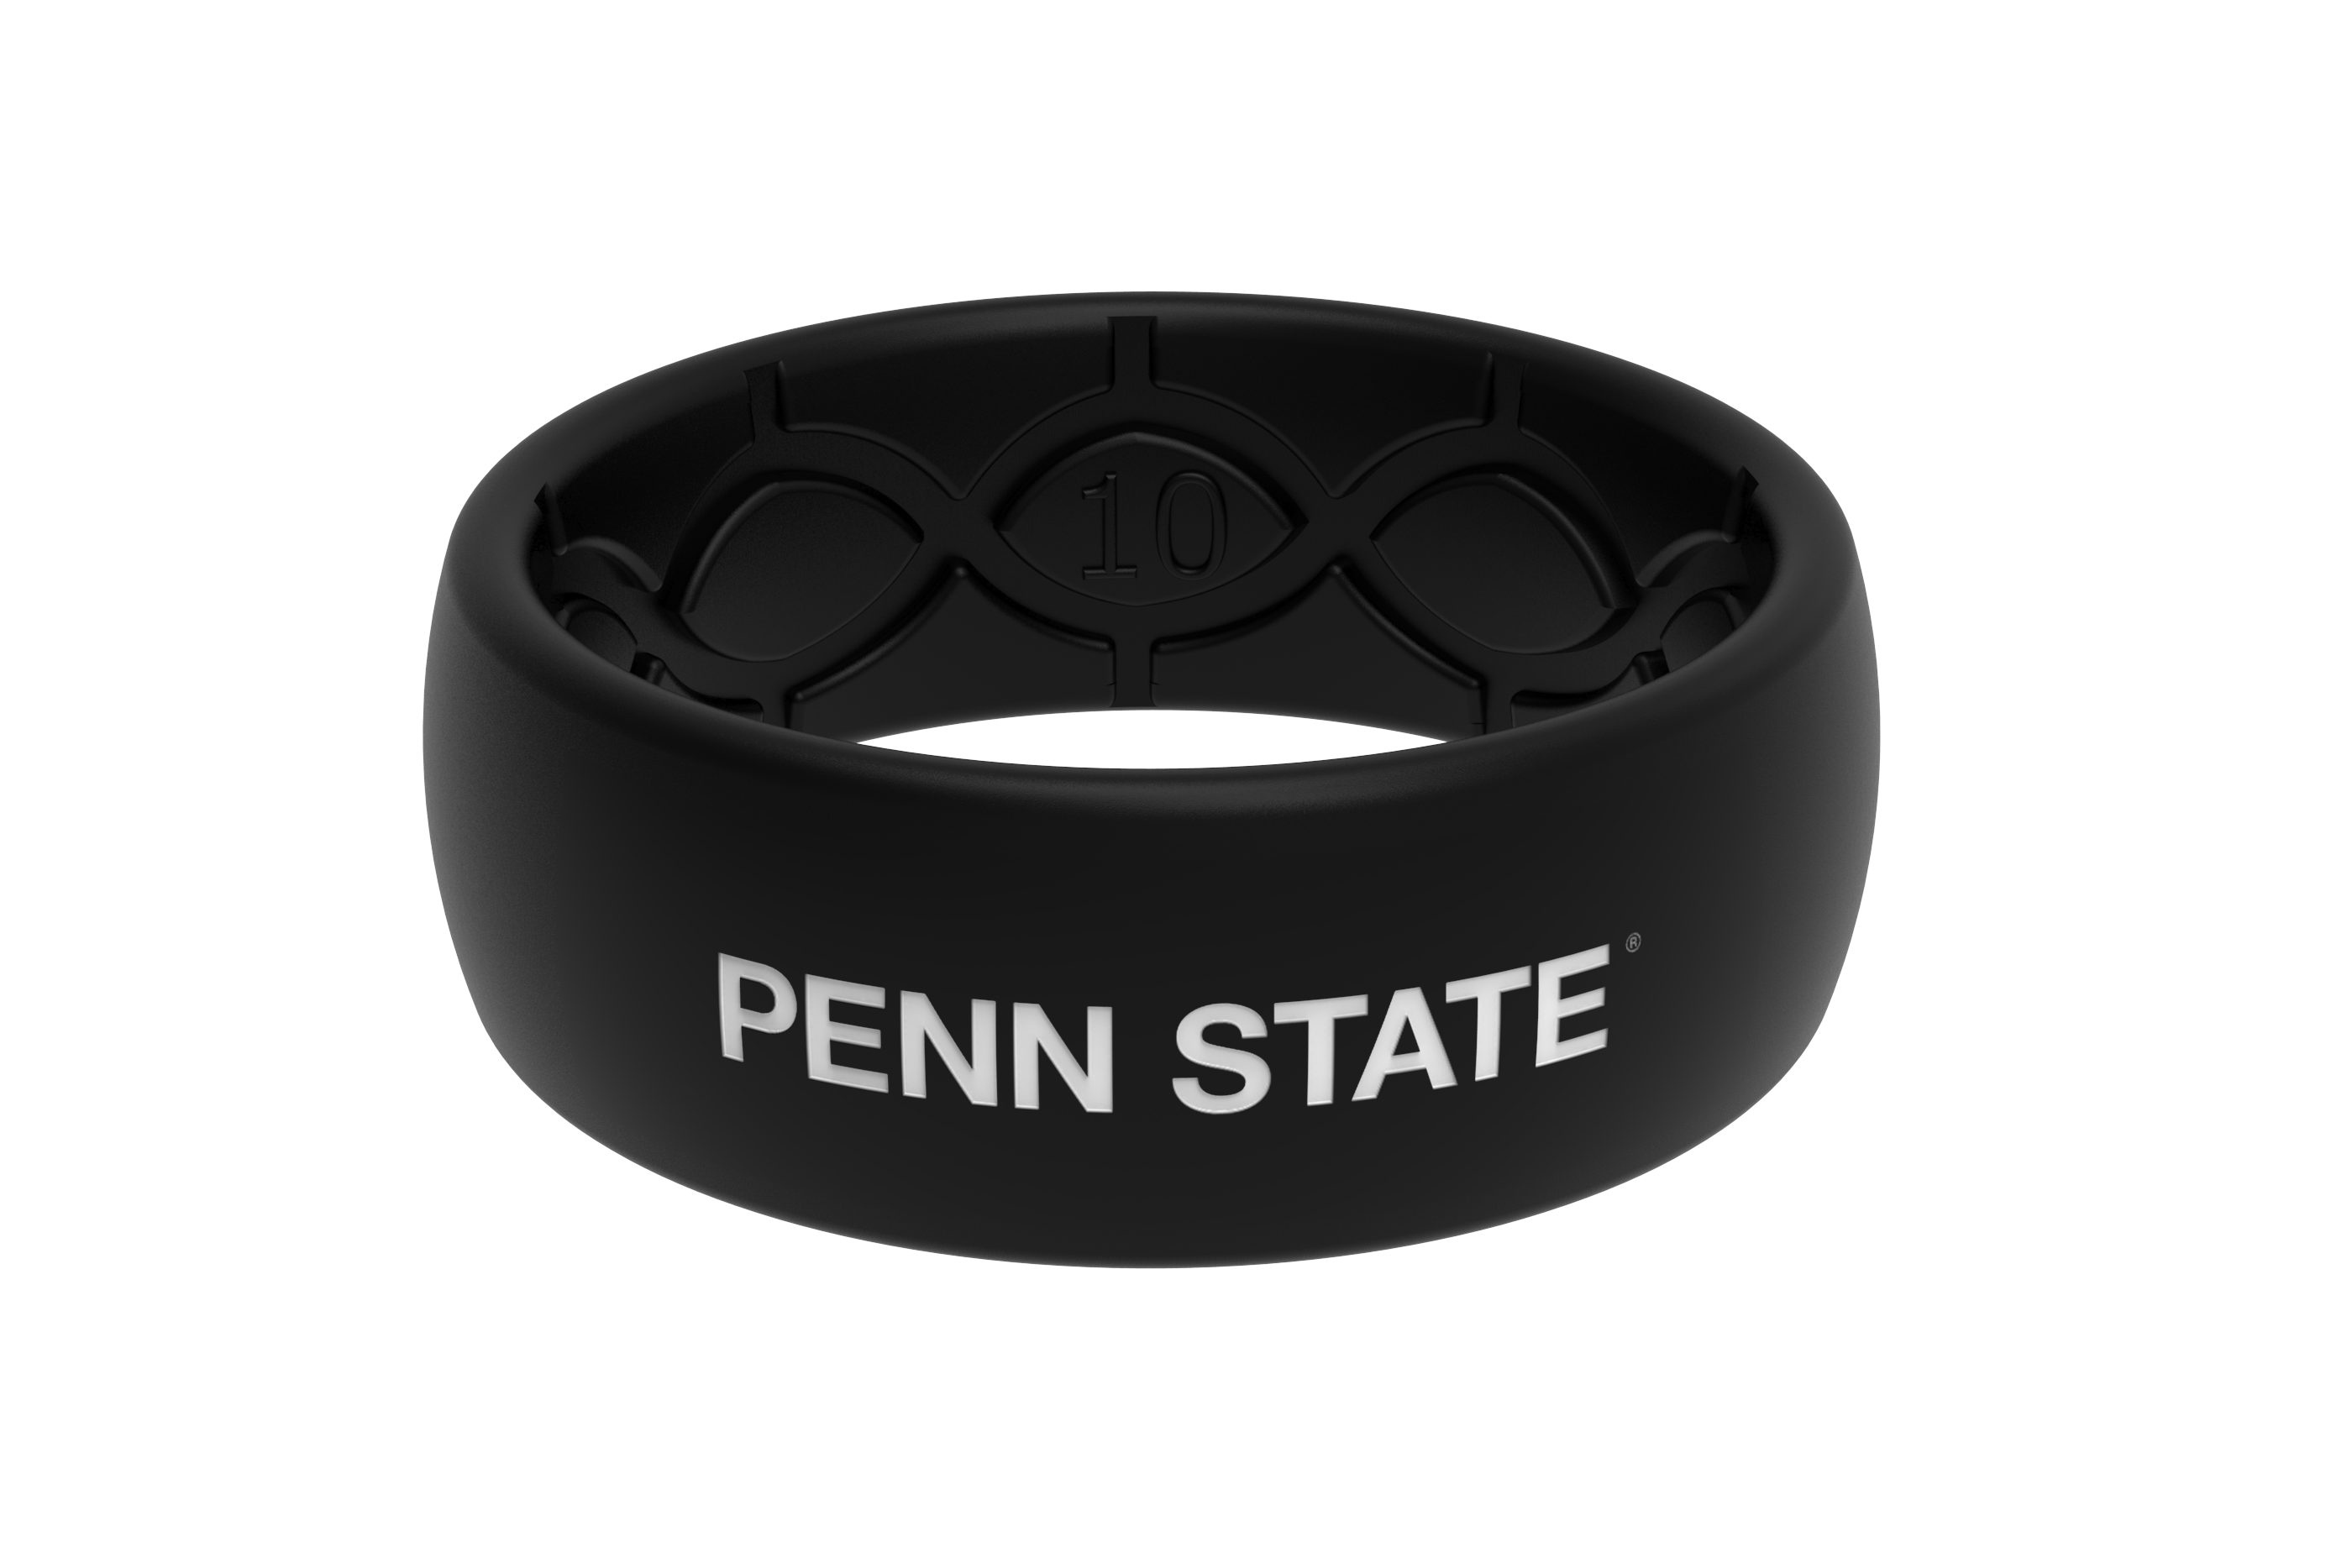 Penn state wide black ring 